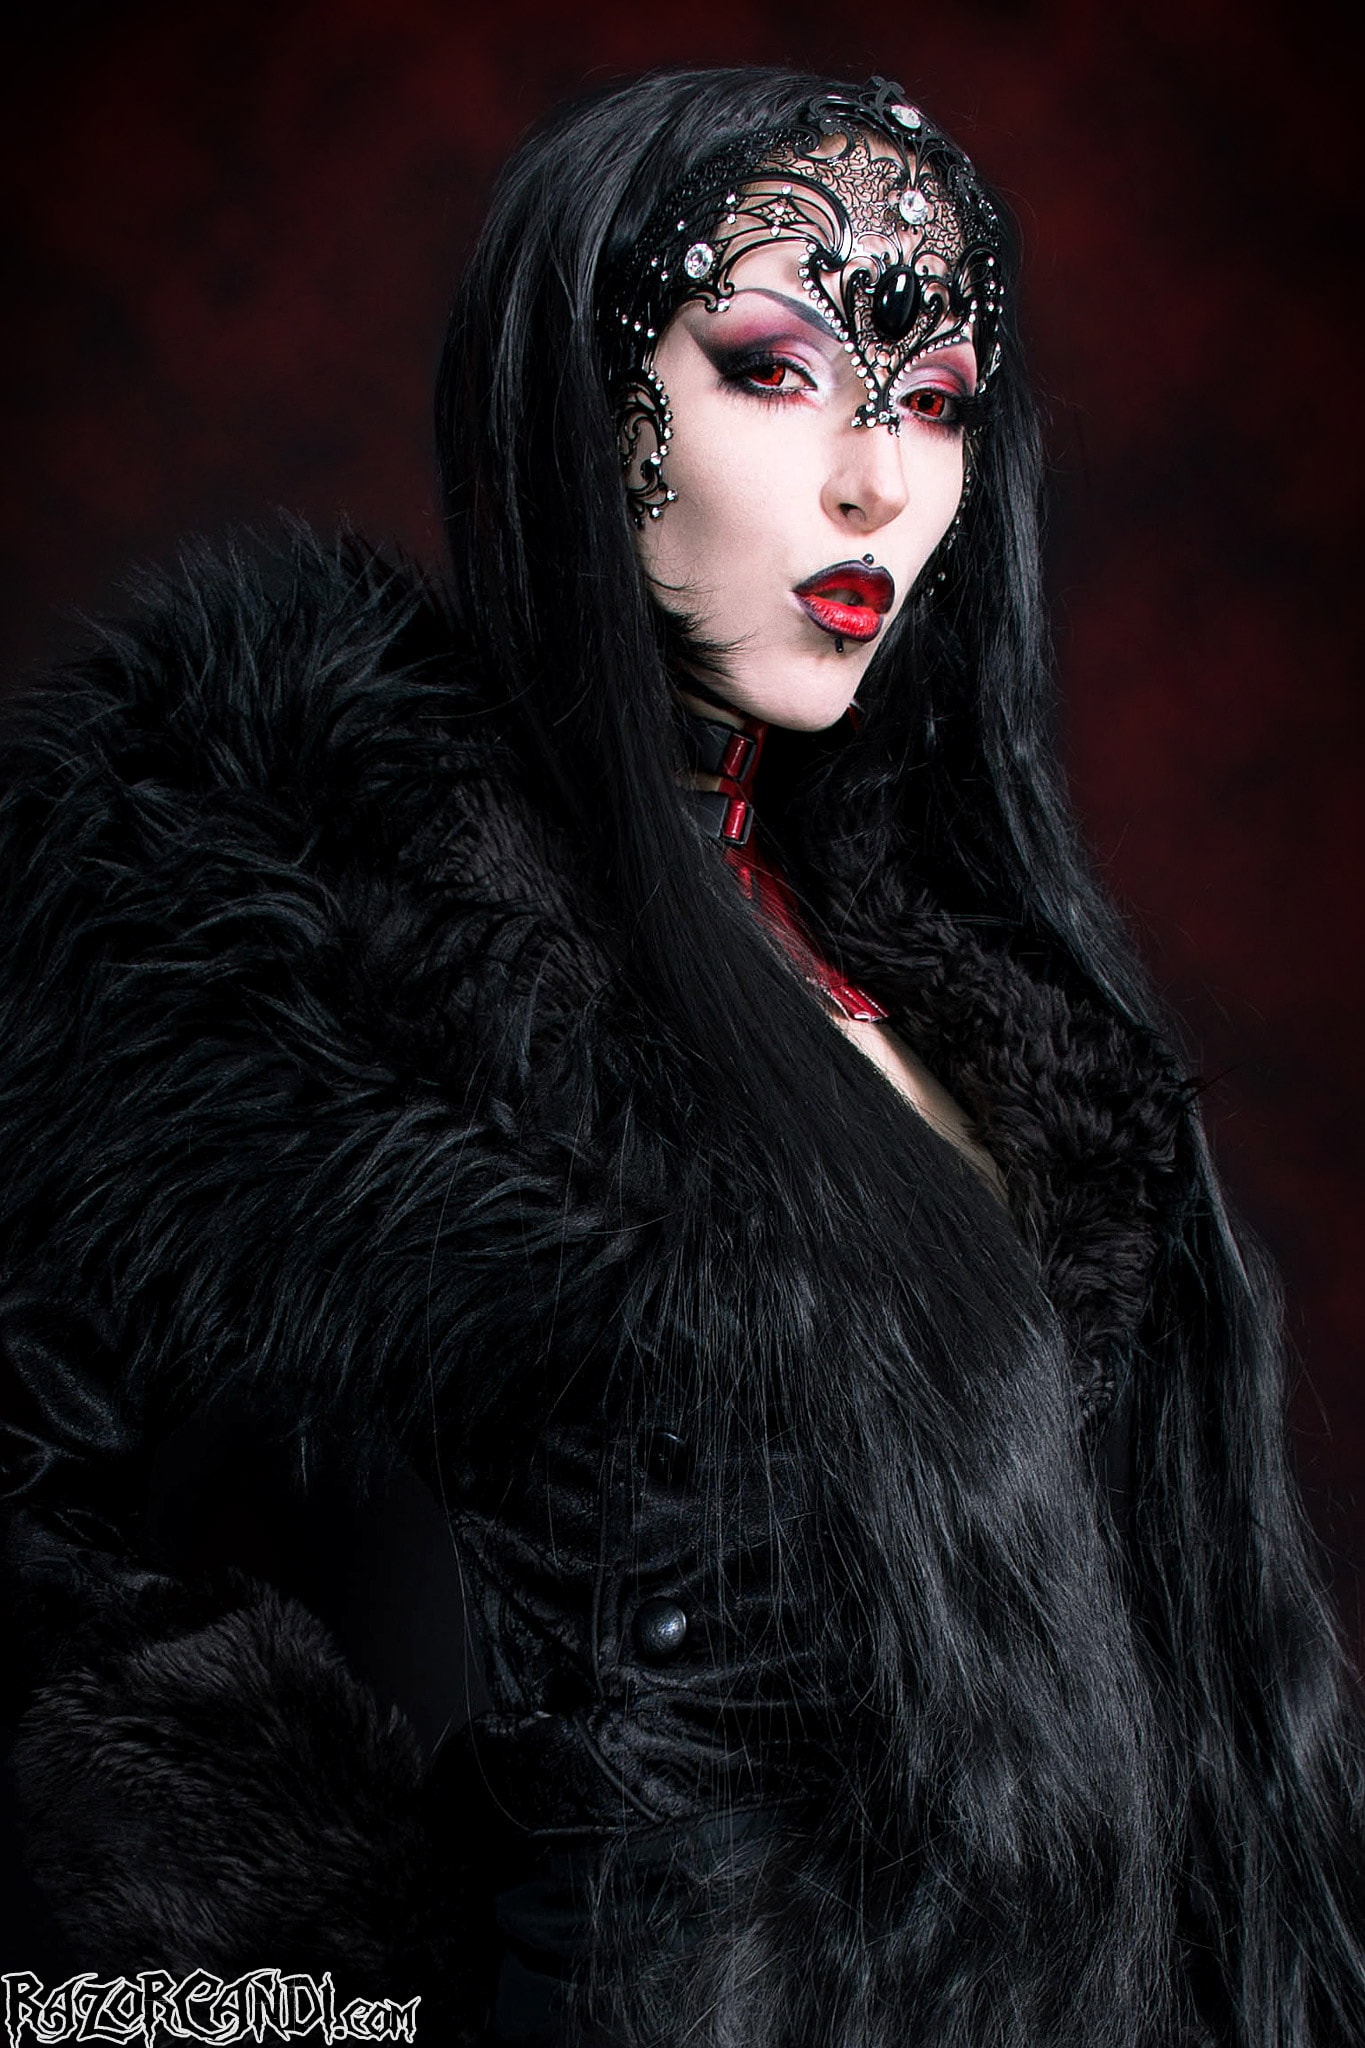 Razor Candi 'Elegantly Tempting Gothic Vampire Beauty RazorCandi' starring Razor Candi (Photo 2)